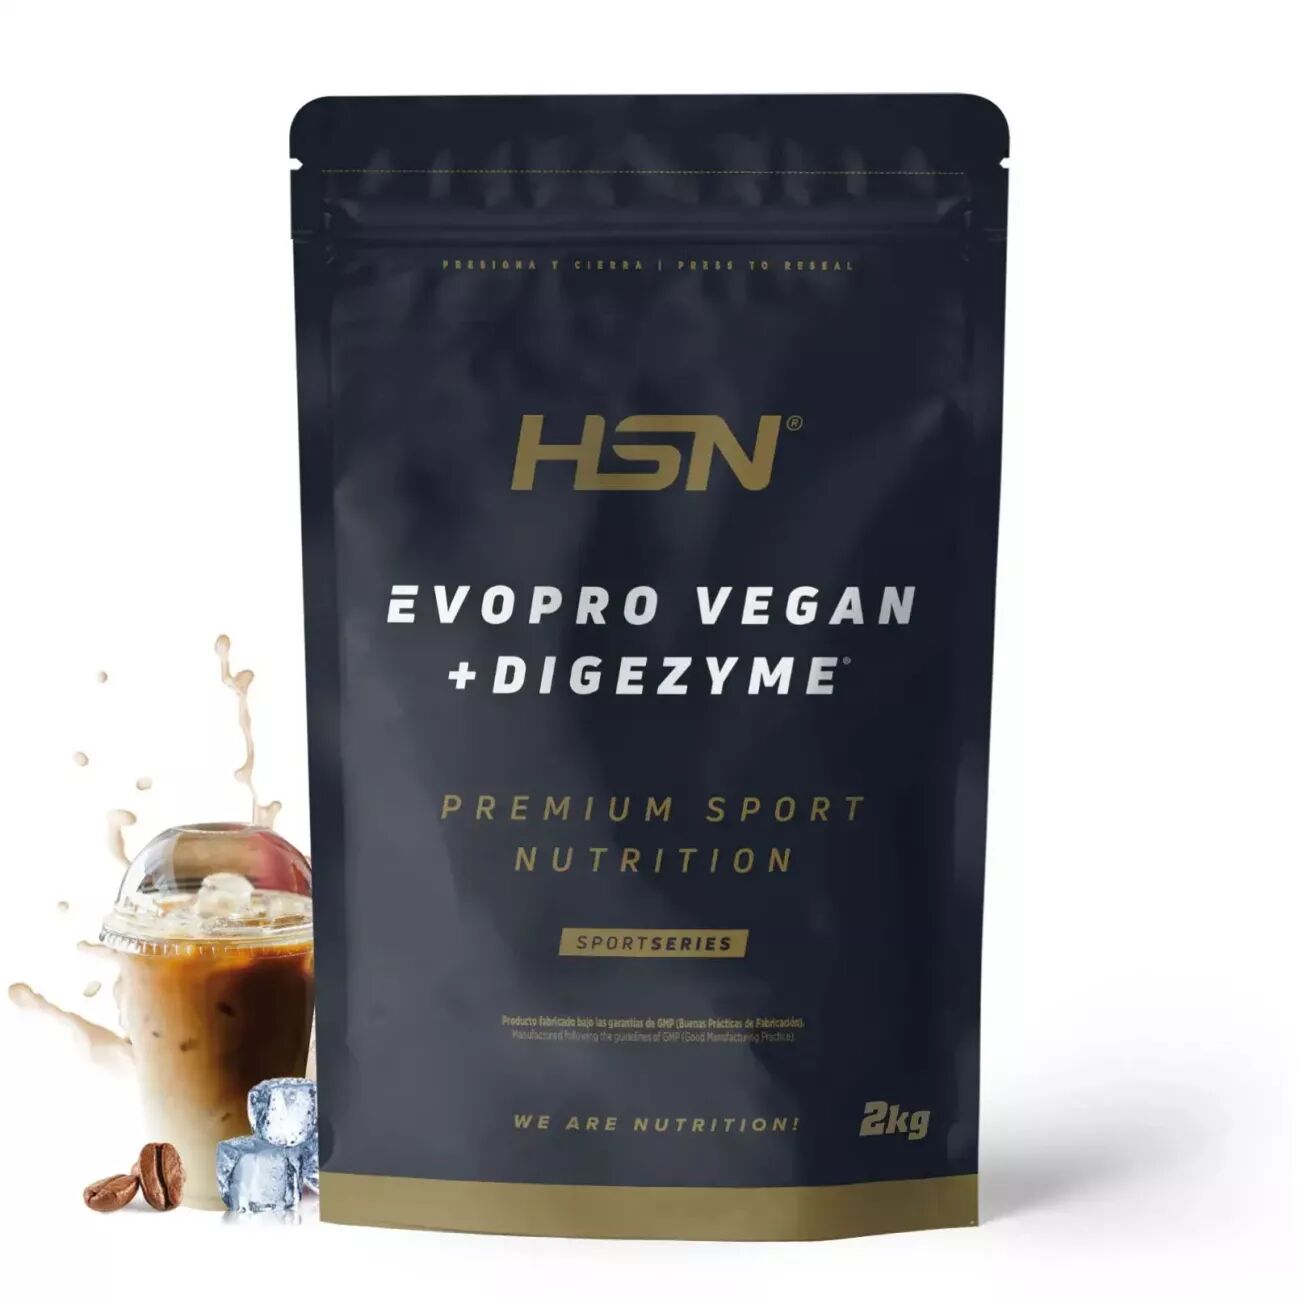 HSN Evopro vegan (mezcla proteínas premium) + digezyme® 2kg café helado